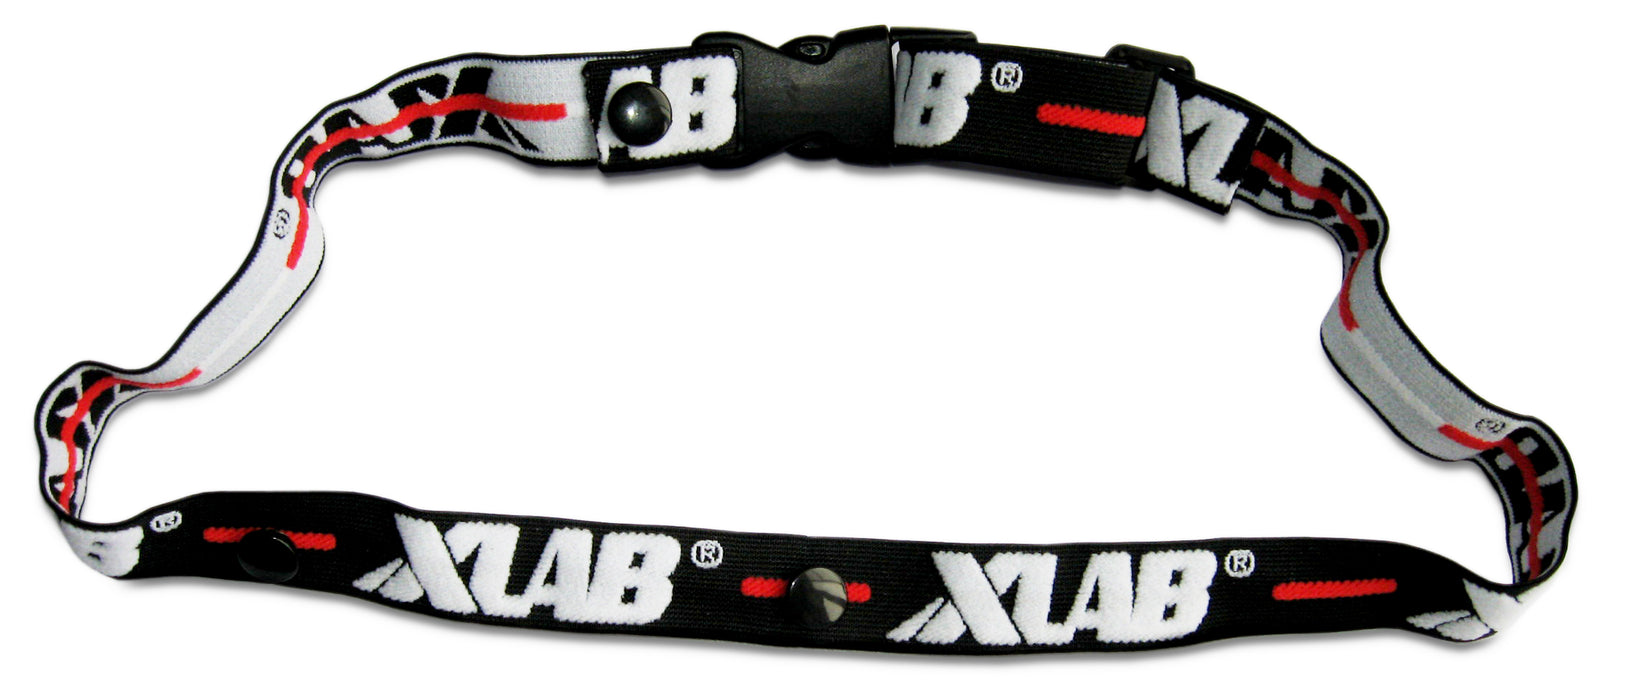 Xlab Race Belt